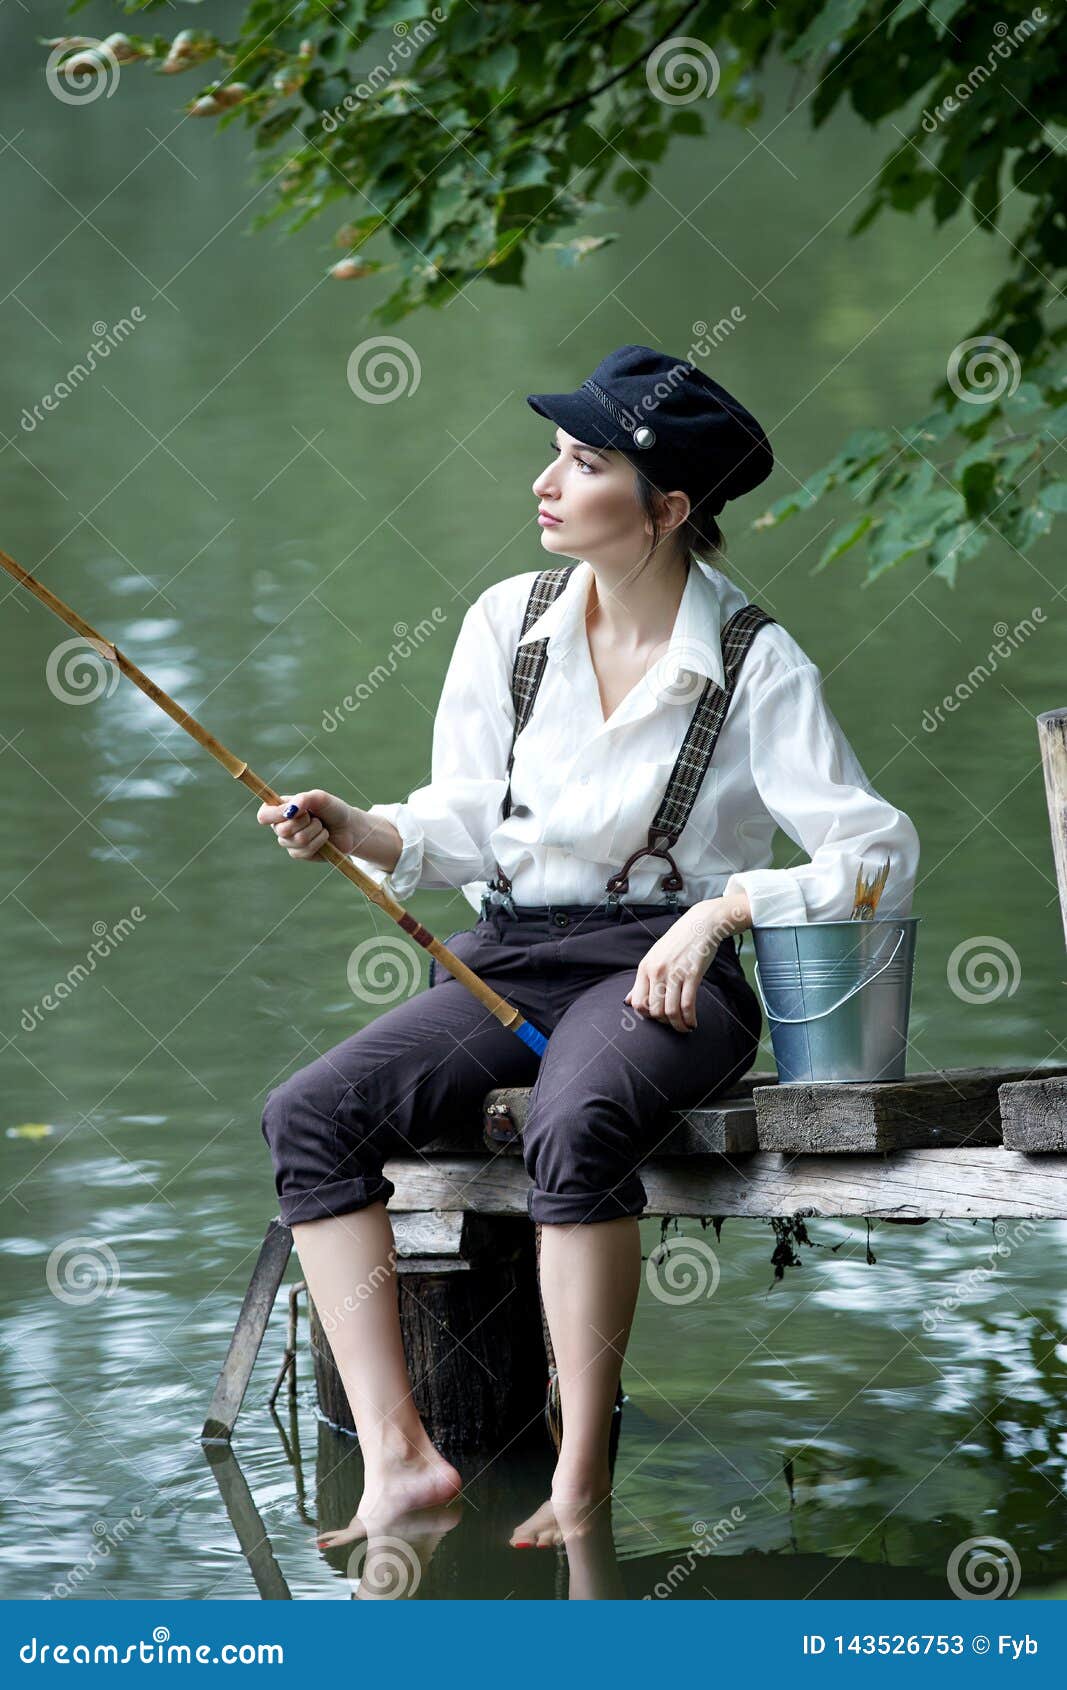 boyish looking girl fishing outdoors